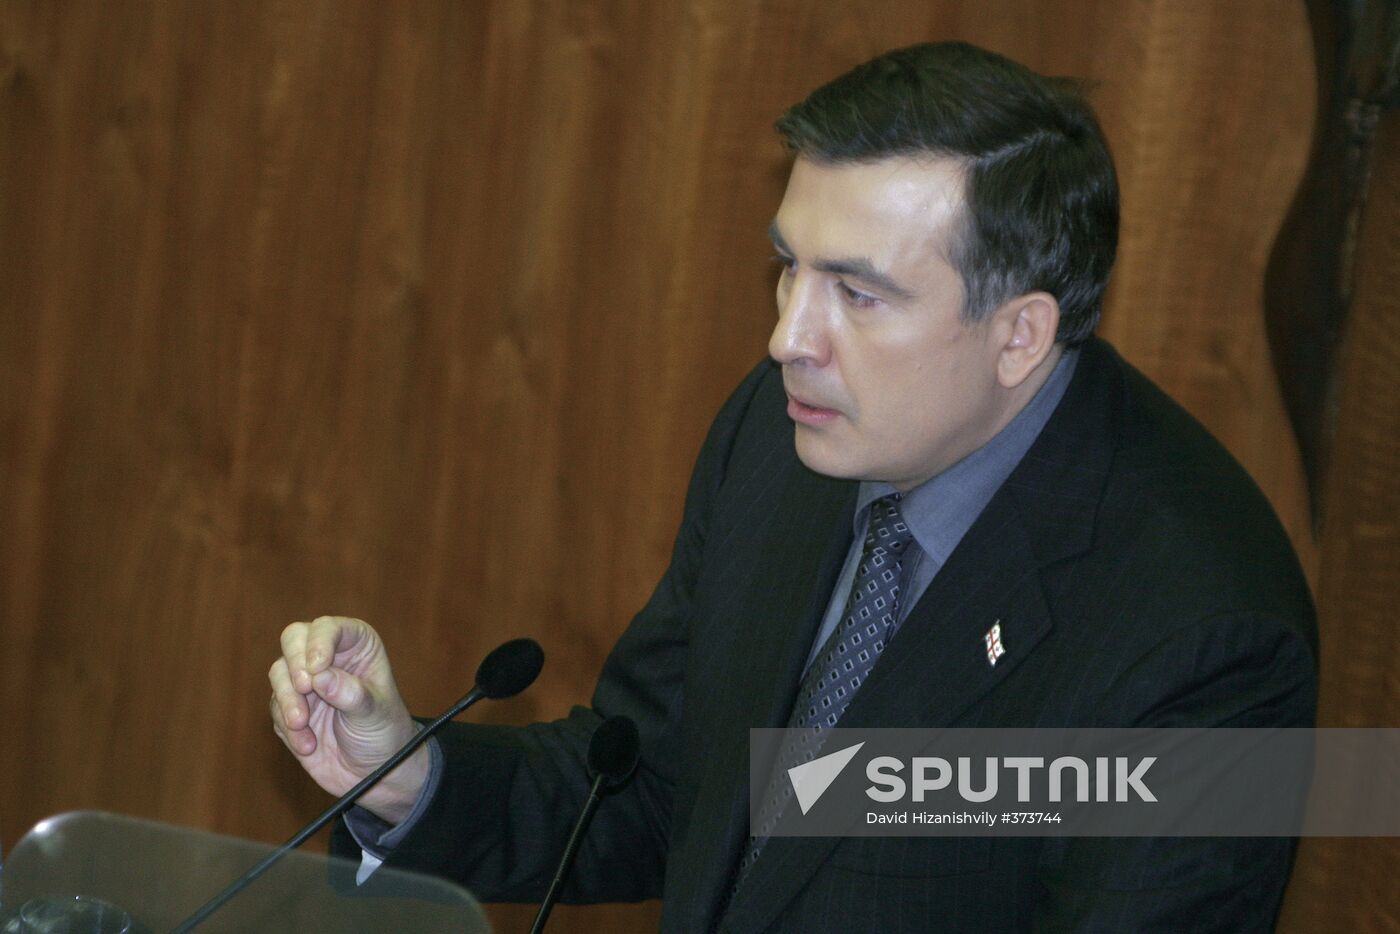 Georgian President Saakashvili speaking in parliament